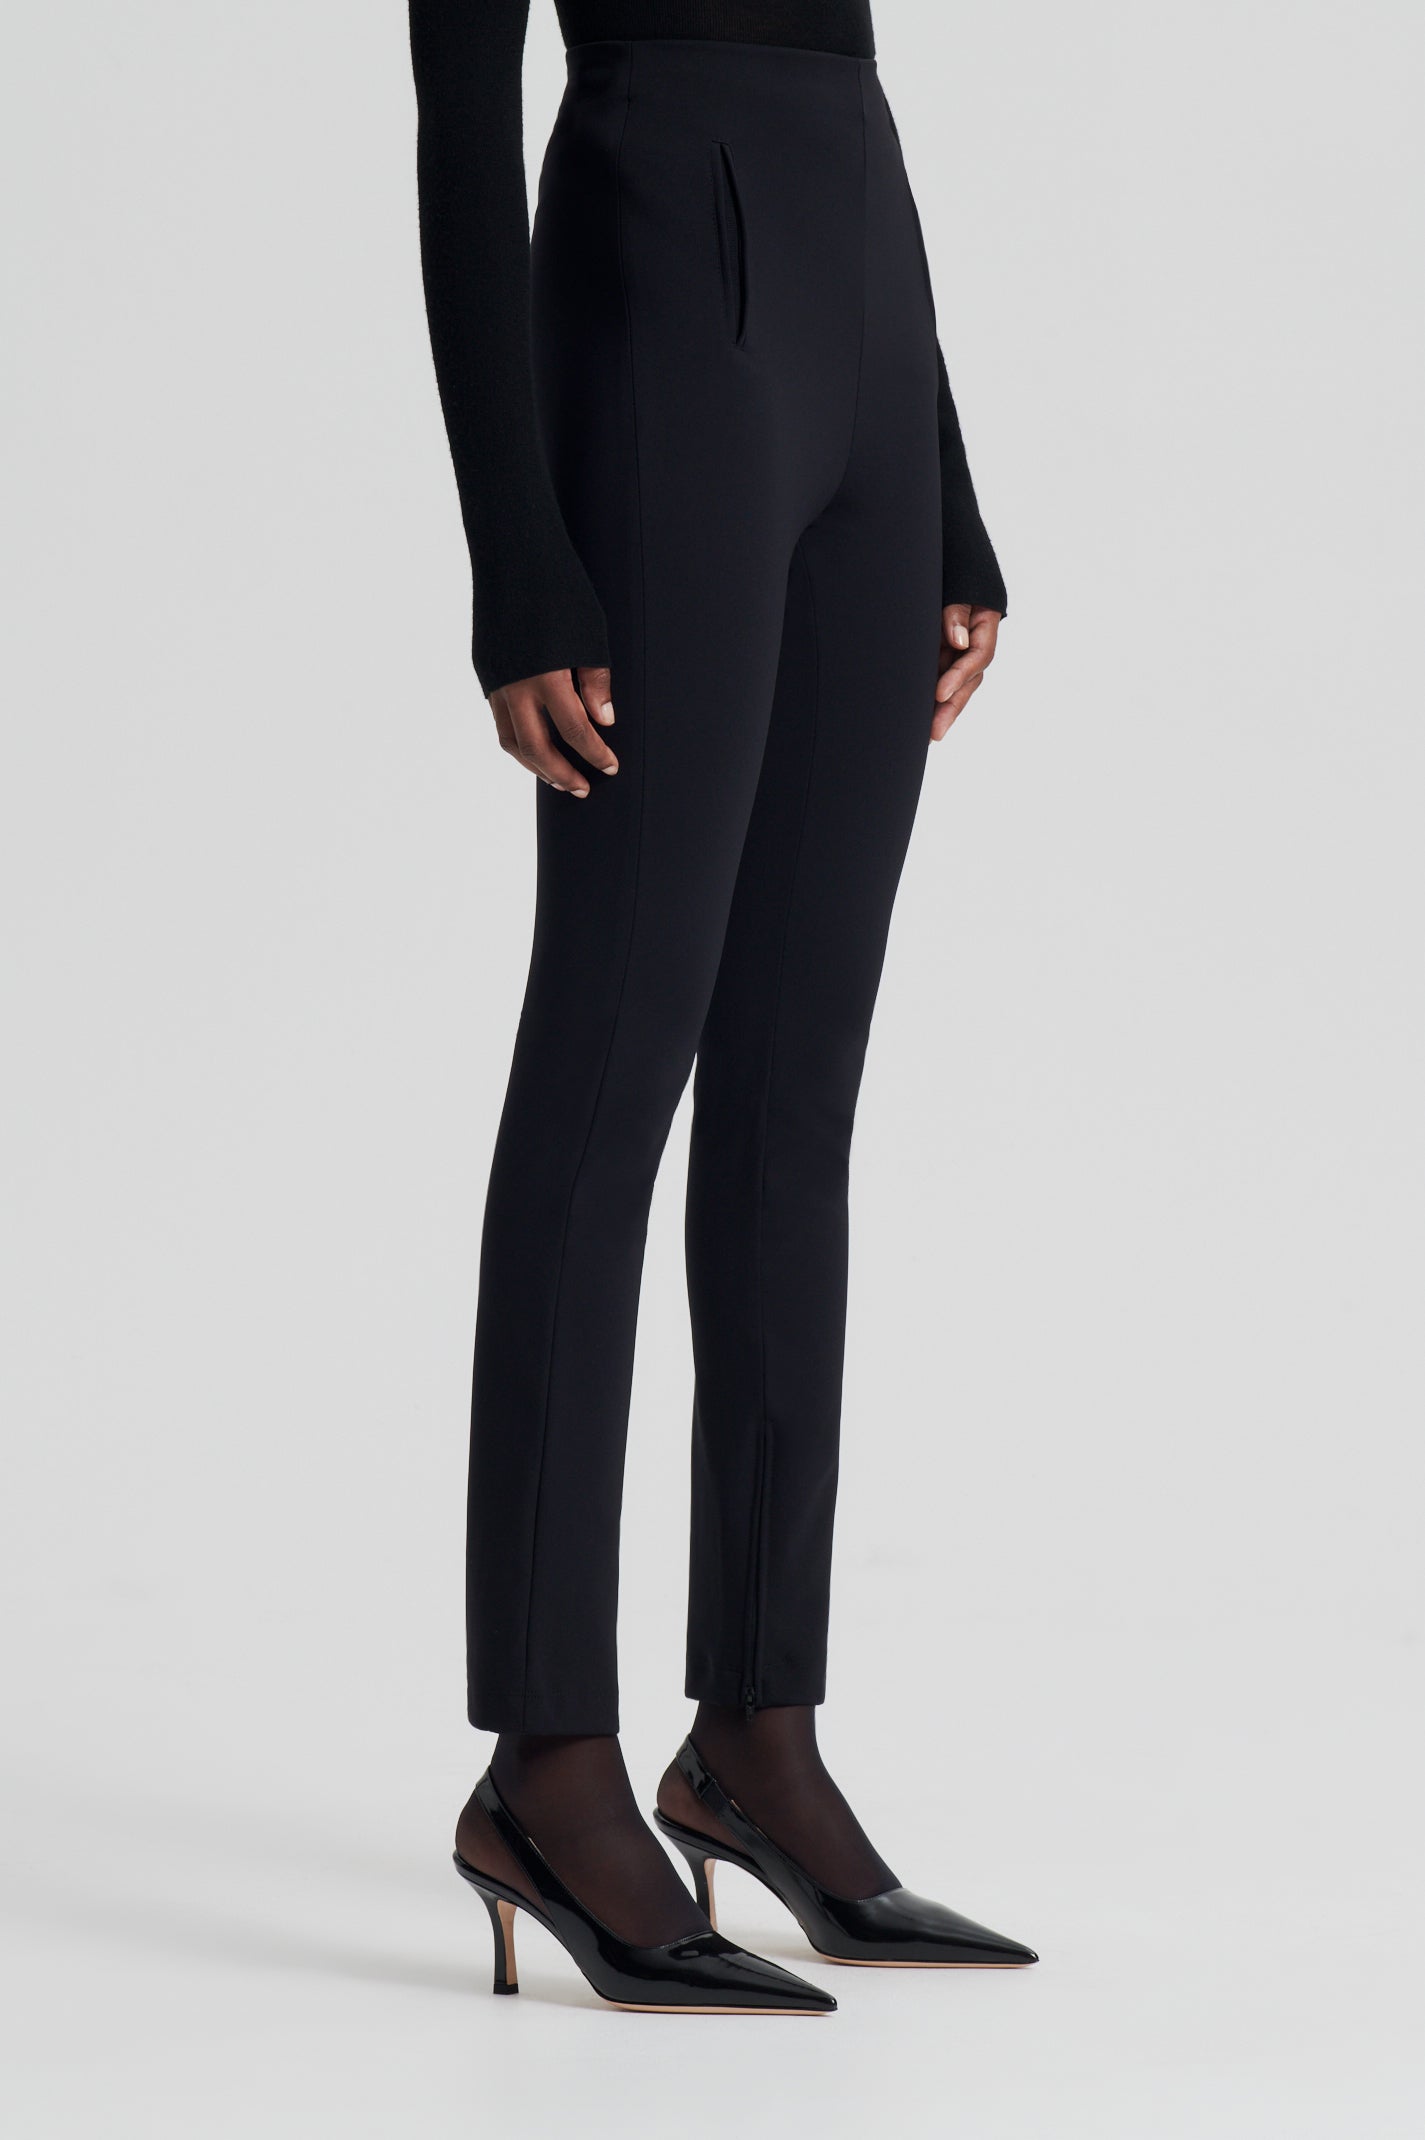 Top 227+ black leggings with zippers best